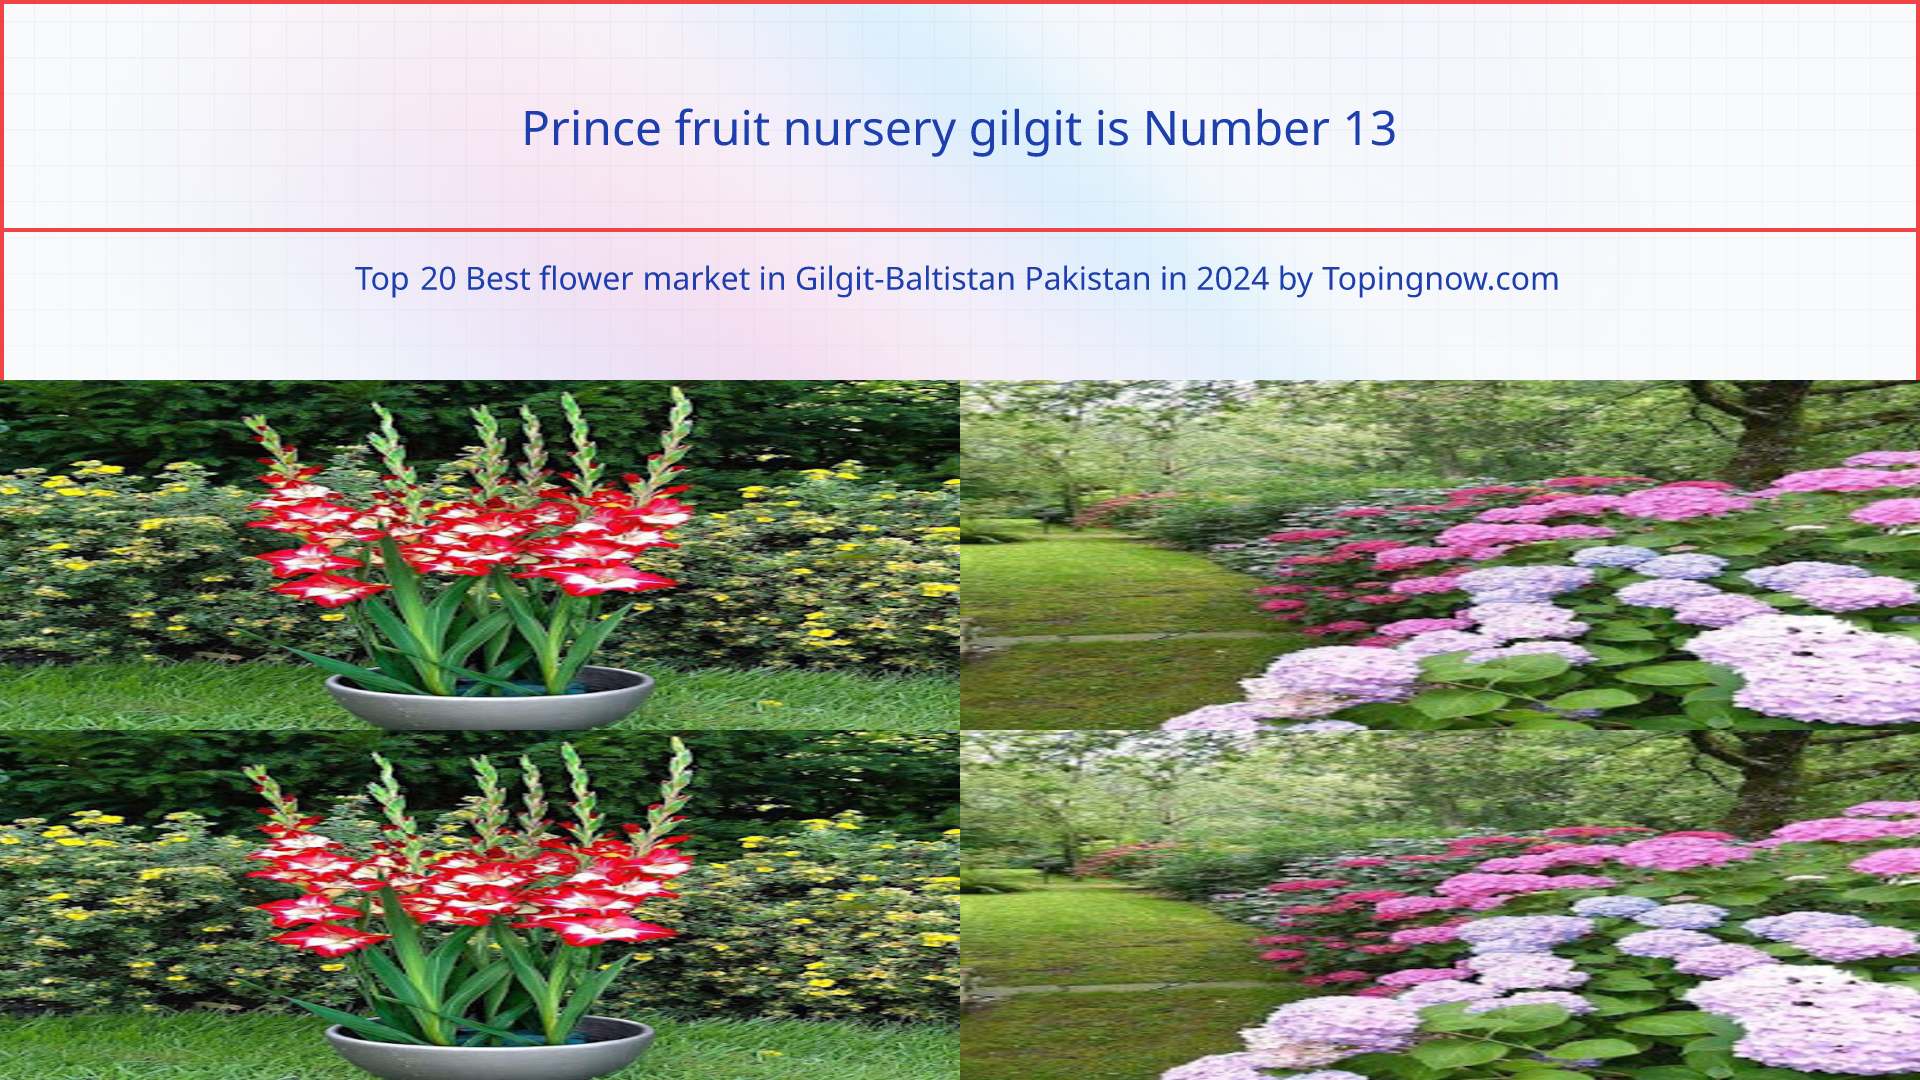 Prince fruit nursery gilgit: Top 20 Best flower market in Gilgit-Baltistan Pakistan in 2024